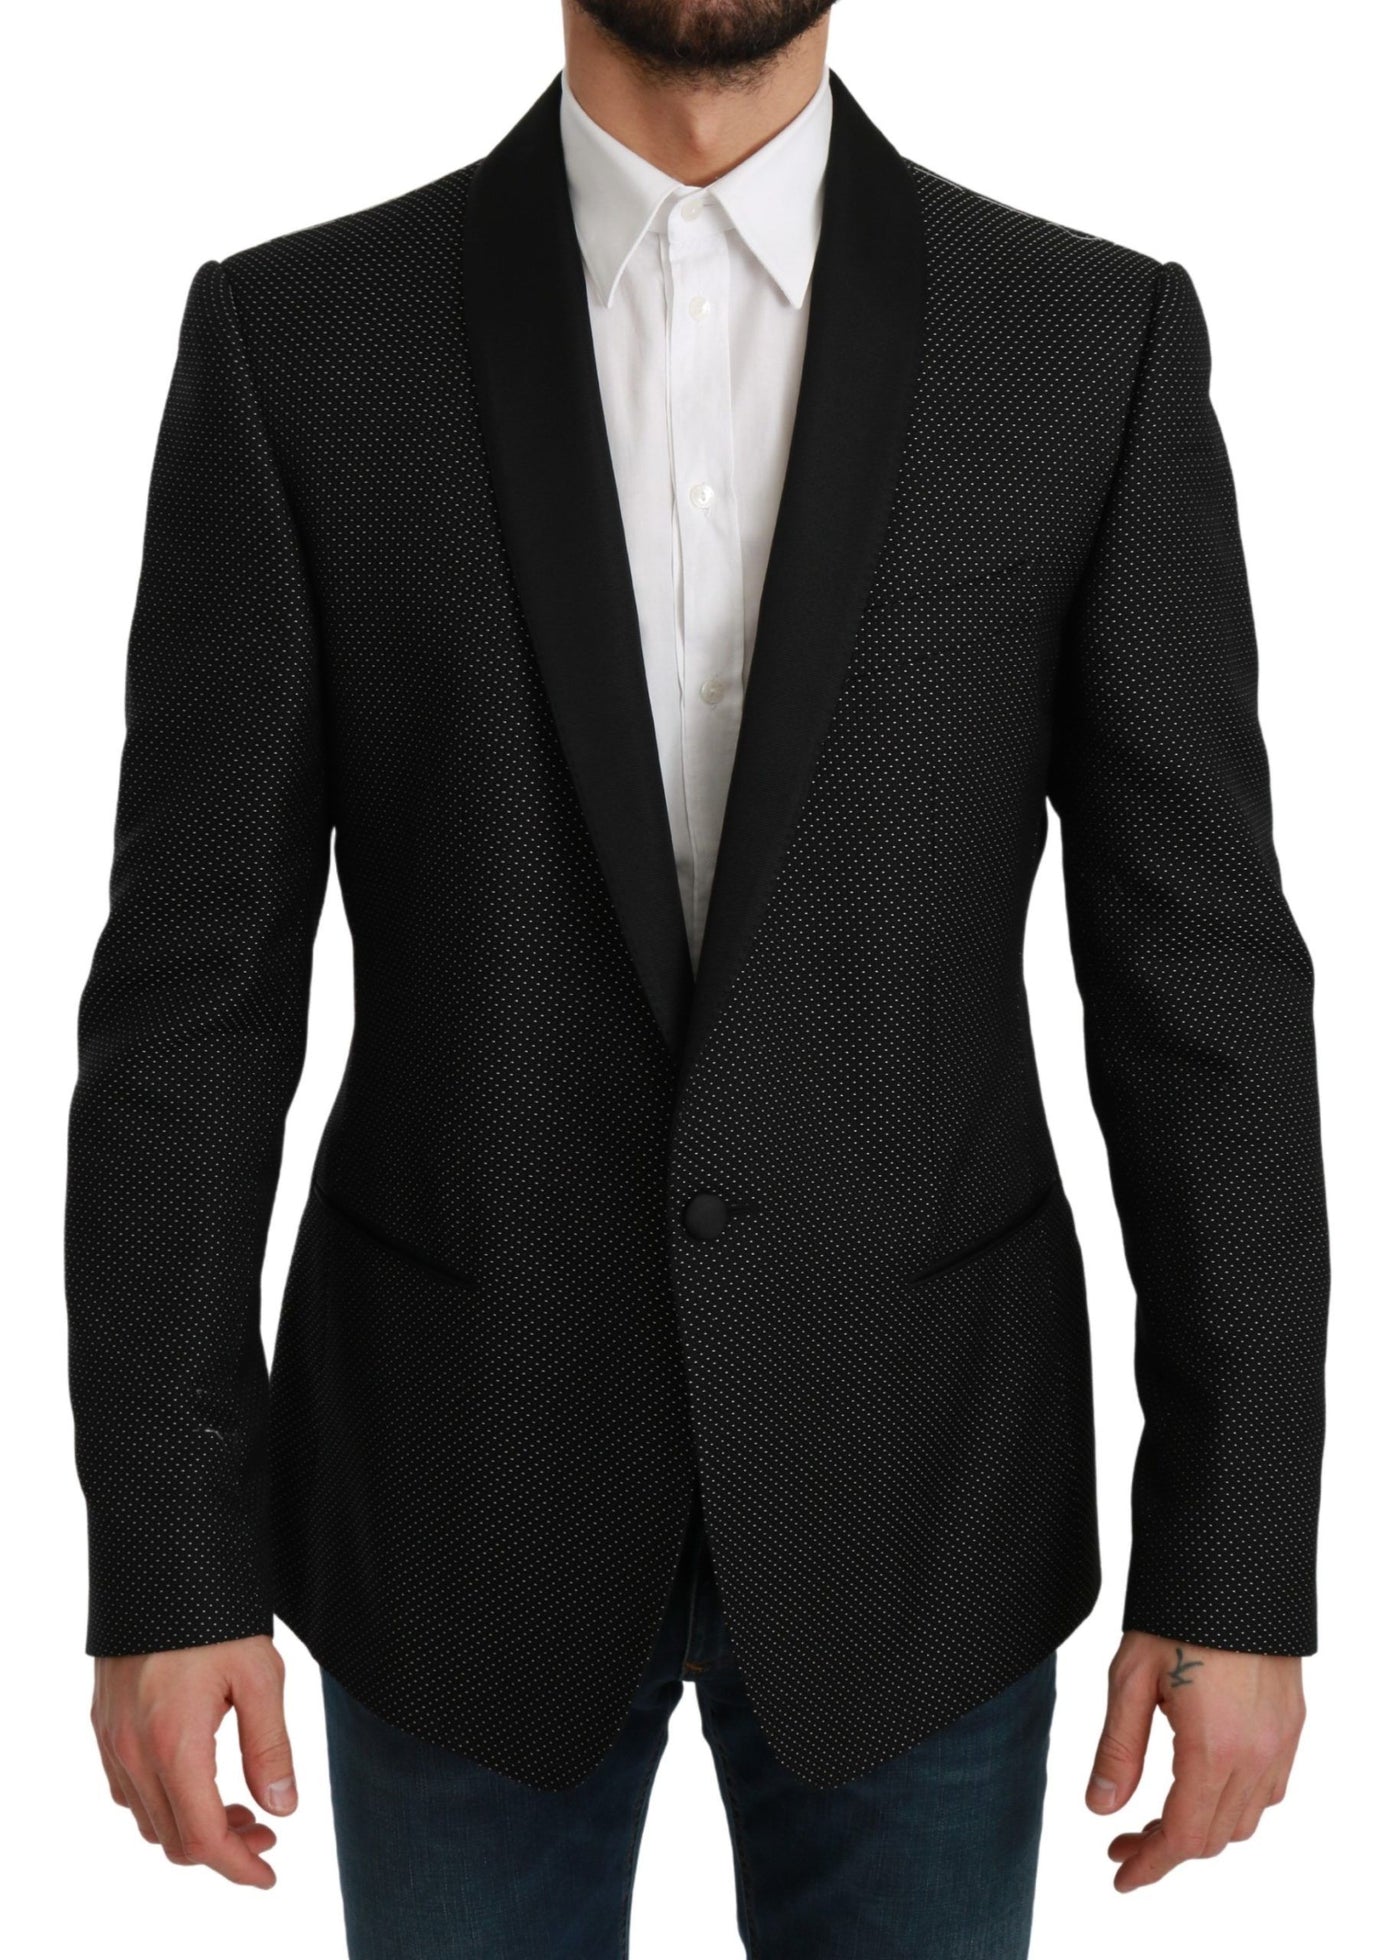 Dolce & Gabbana Black Slim Fit Formal Jacket MARTINI Blazer